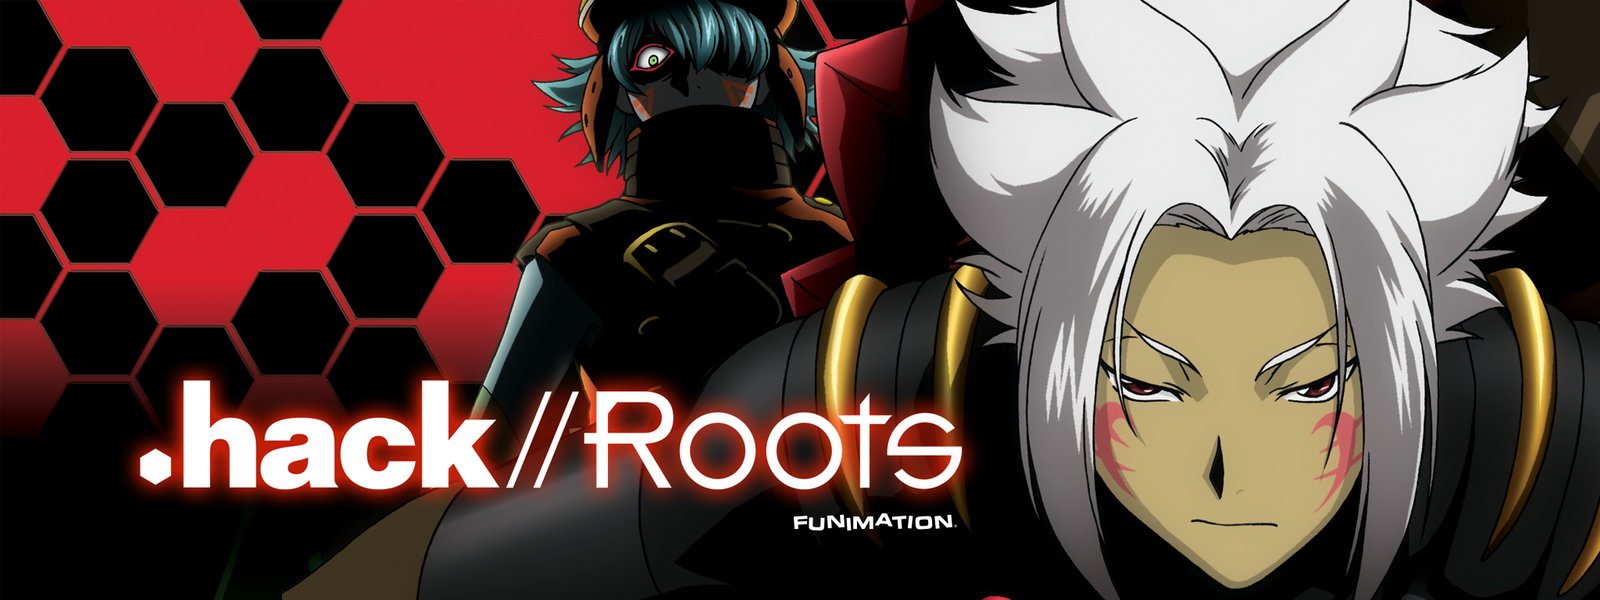 .hack//Roots cyberpunk anime